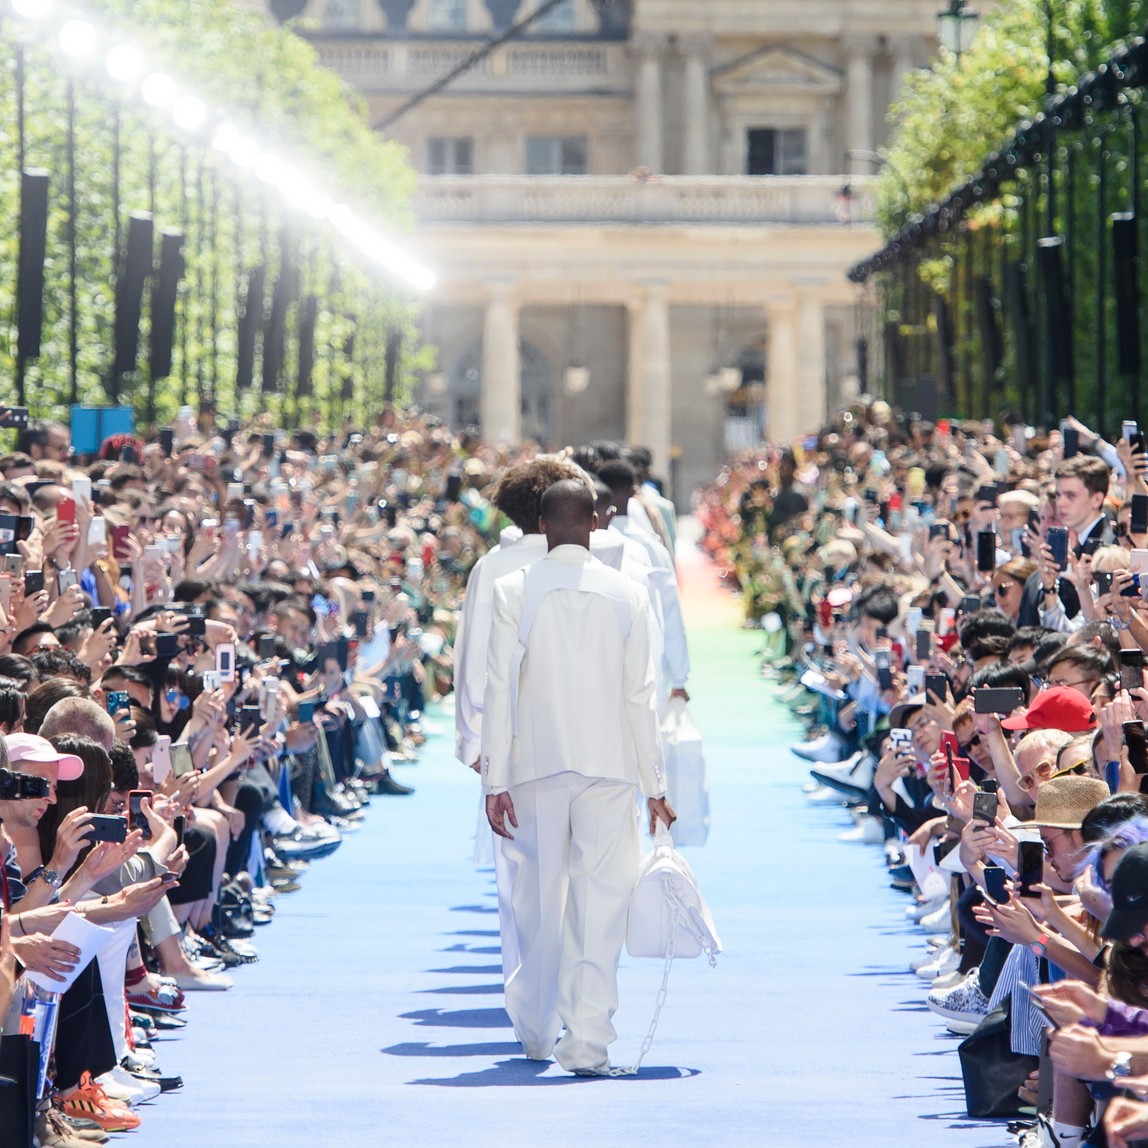 Virgil Abloh makes debut for Louis Vuitton” – Art Mall Global